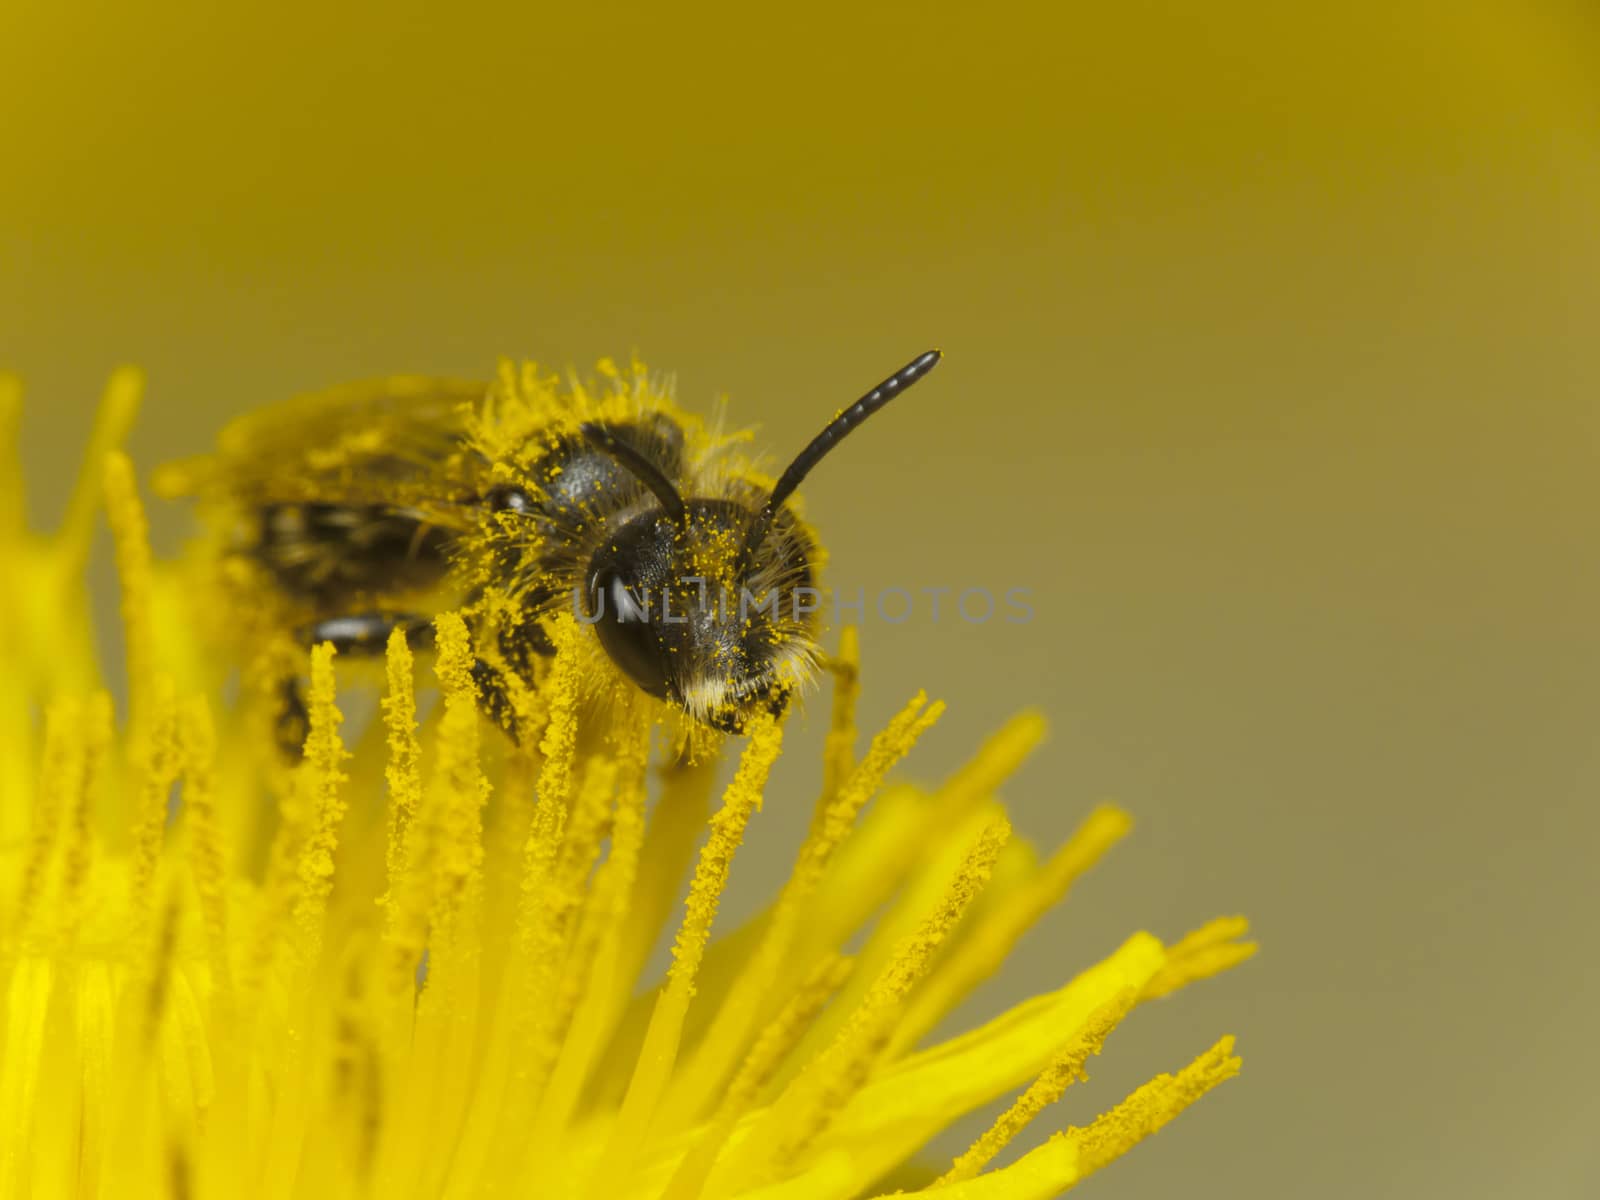 Bee on dandelion pollen covered